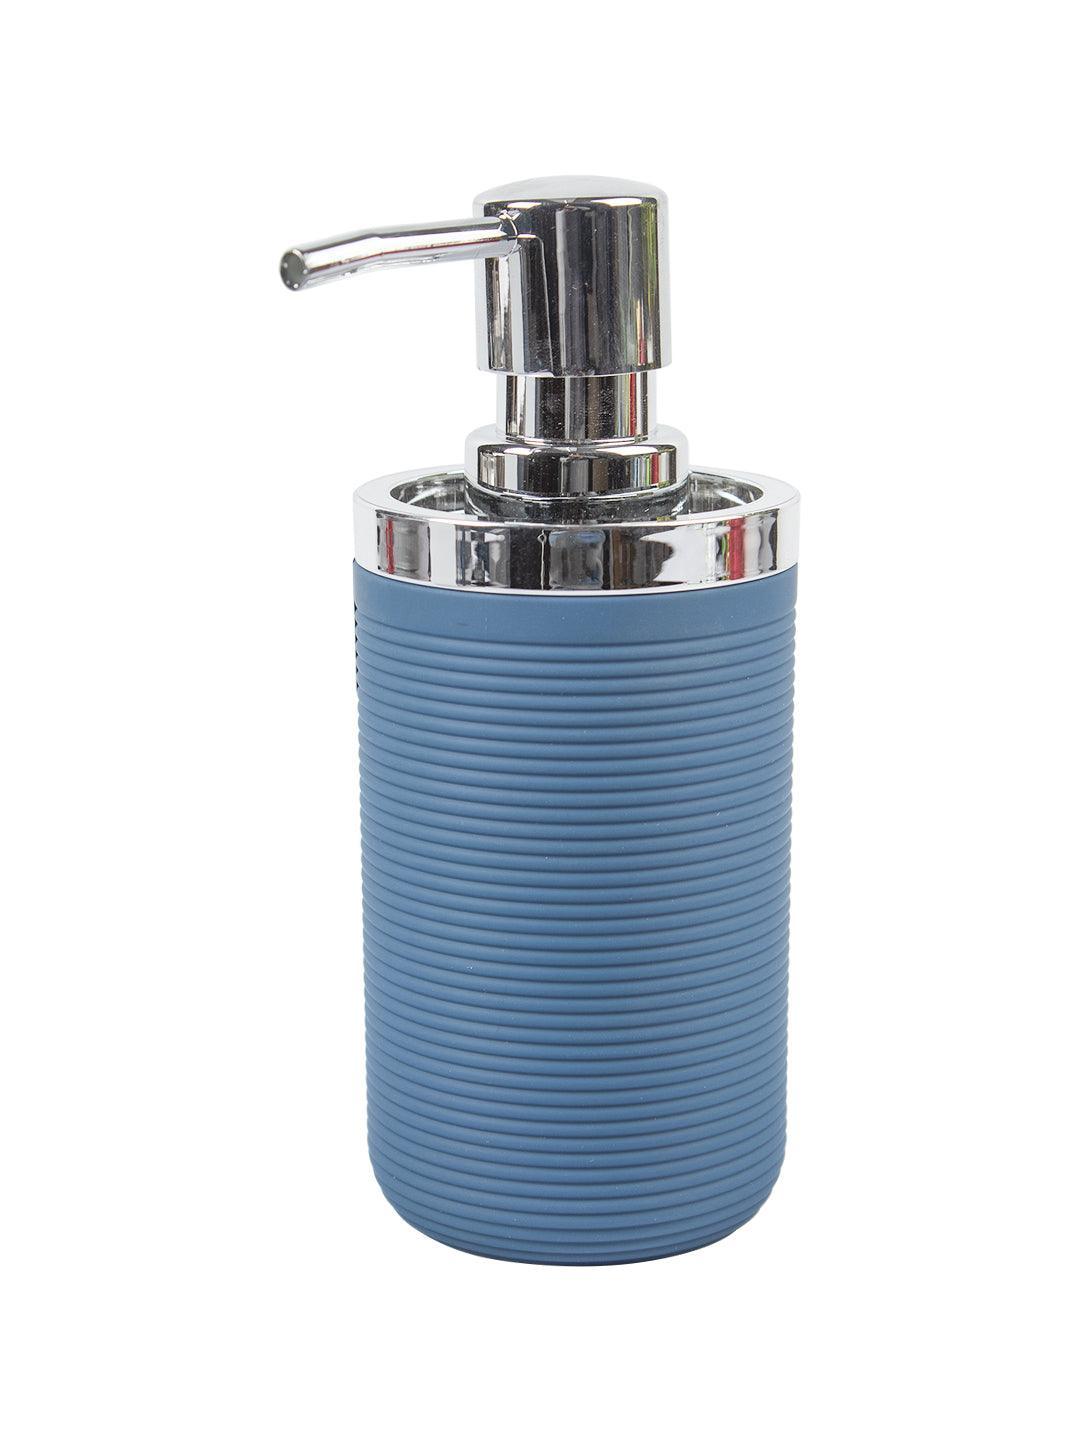 Liquid Soap Dispenser With Silver Pump - 240 mL